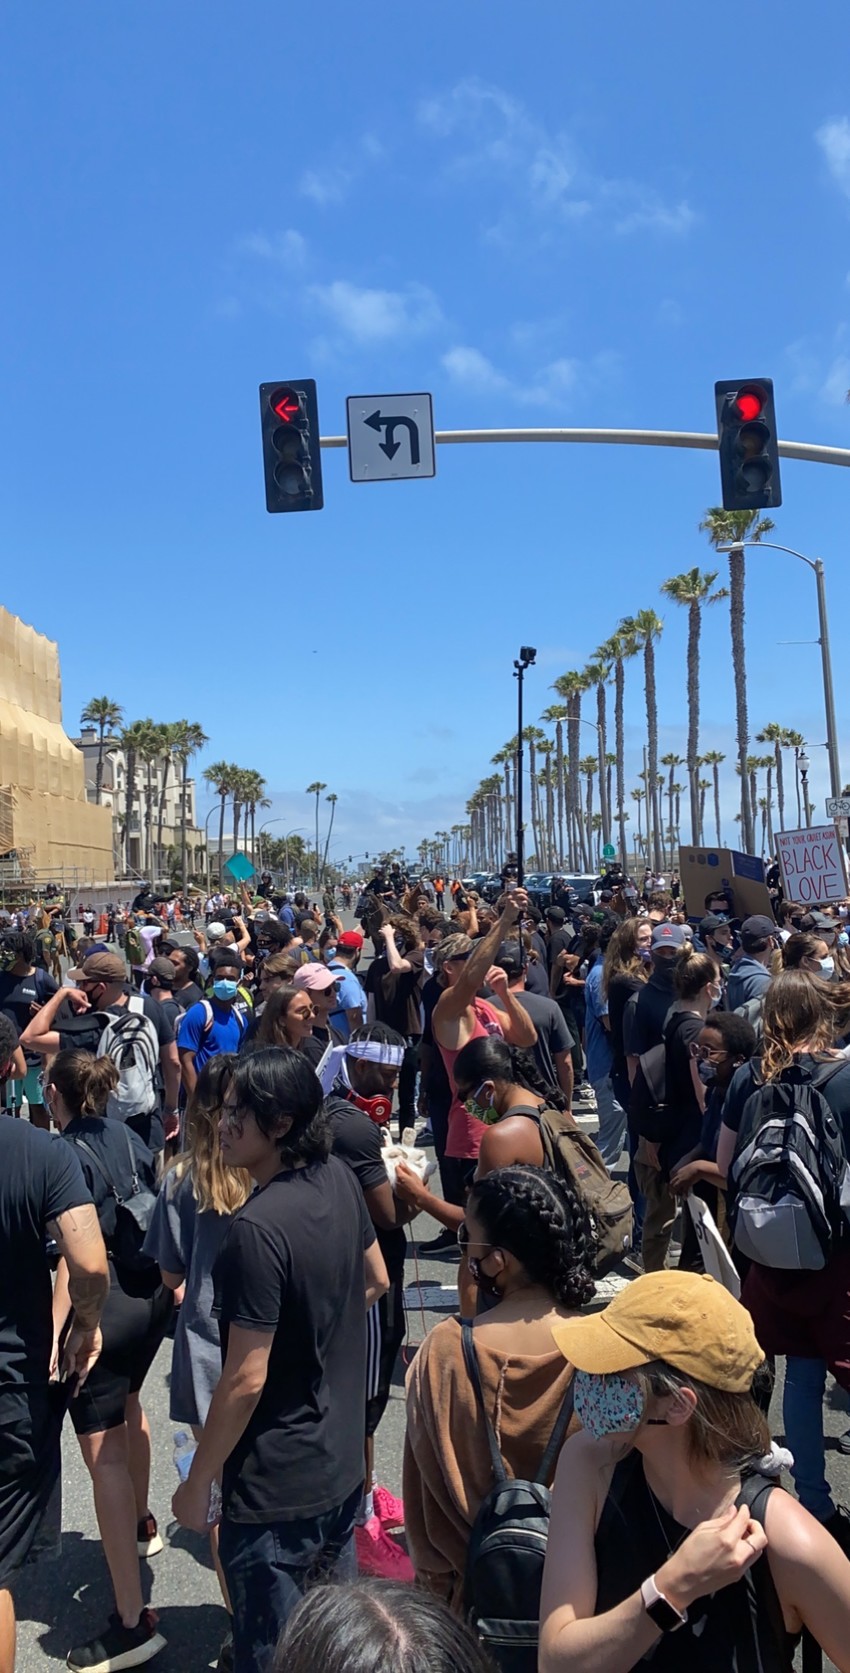 Black Lives Matter march, Huntington Beach, California, 07 June 20 - Full Photo Set credit/Copyright to: Celina Sosefina Yandall